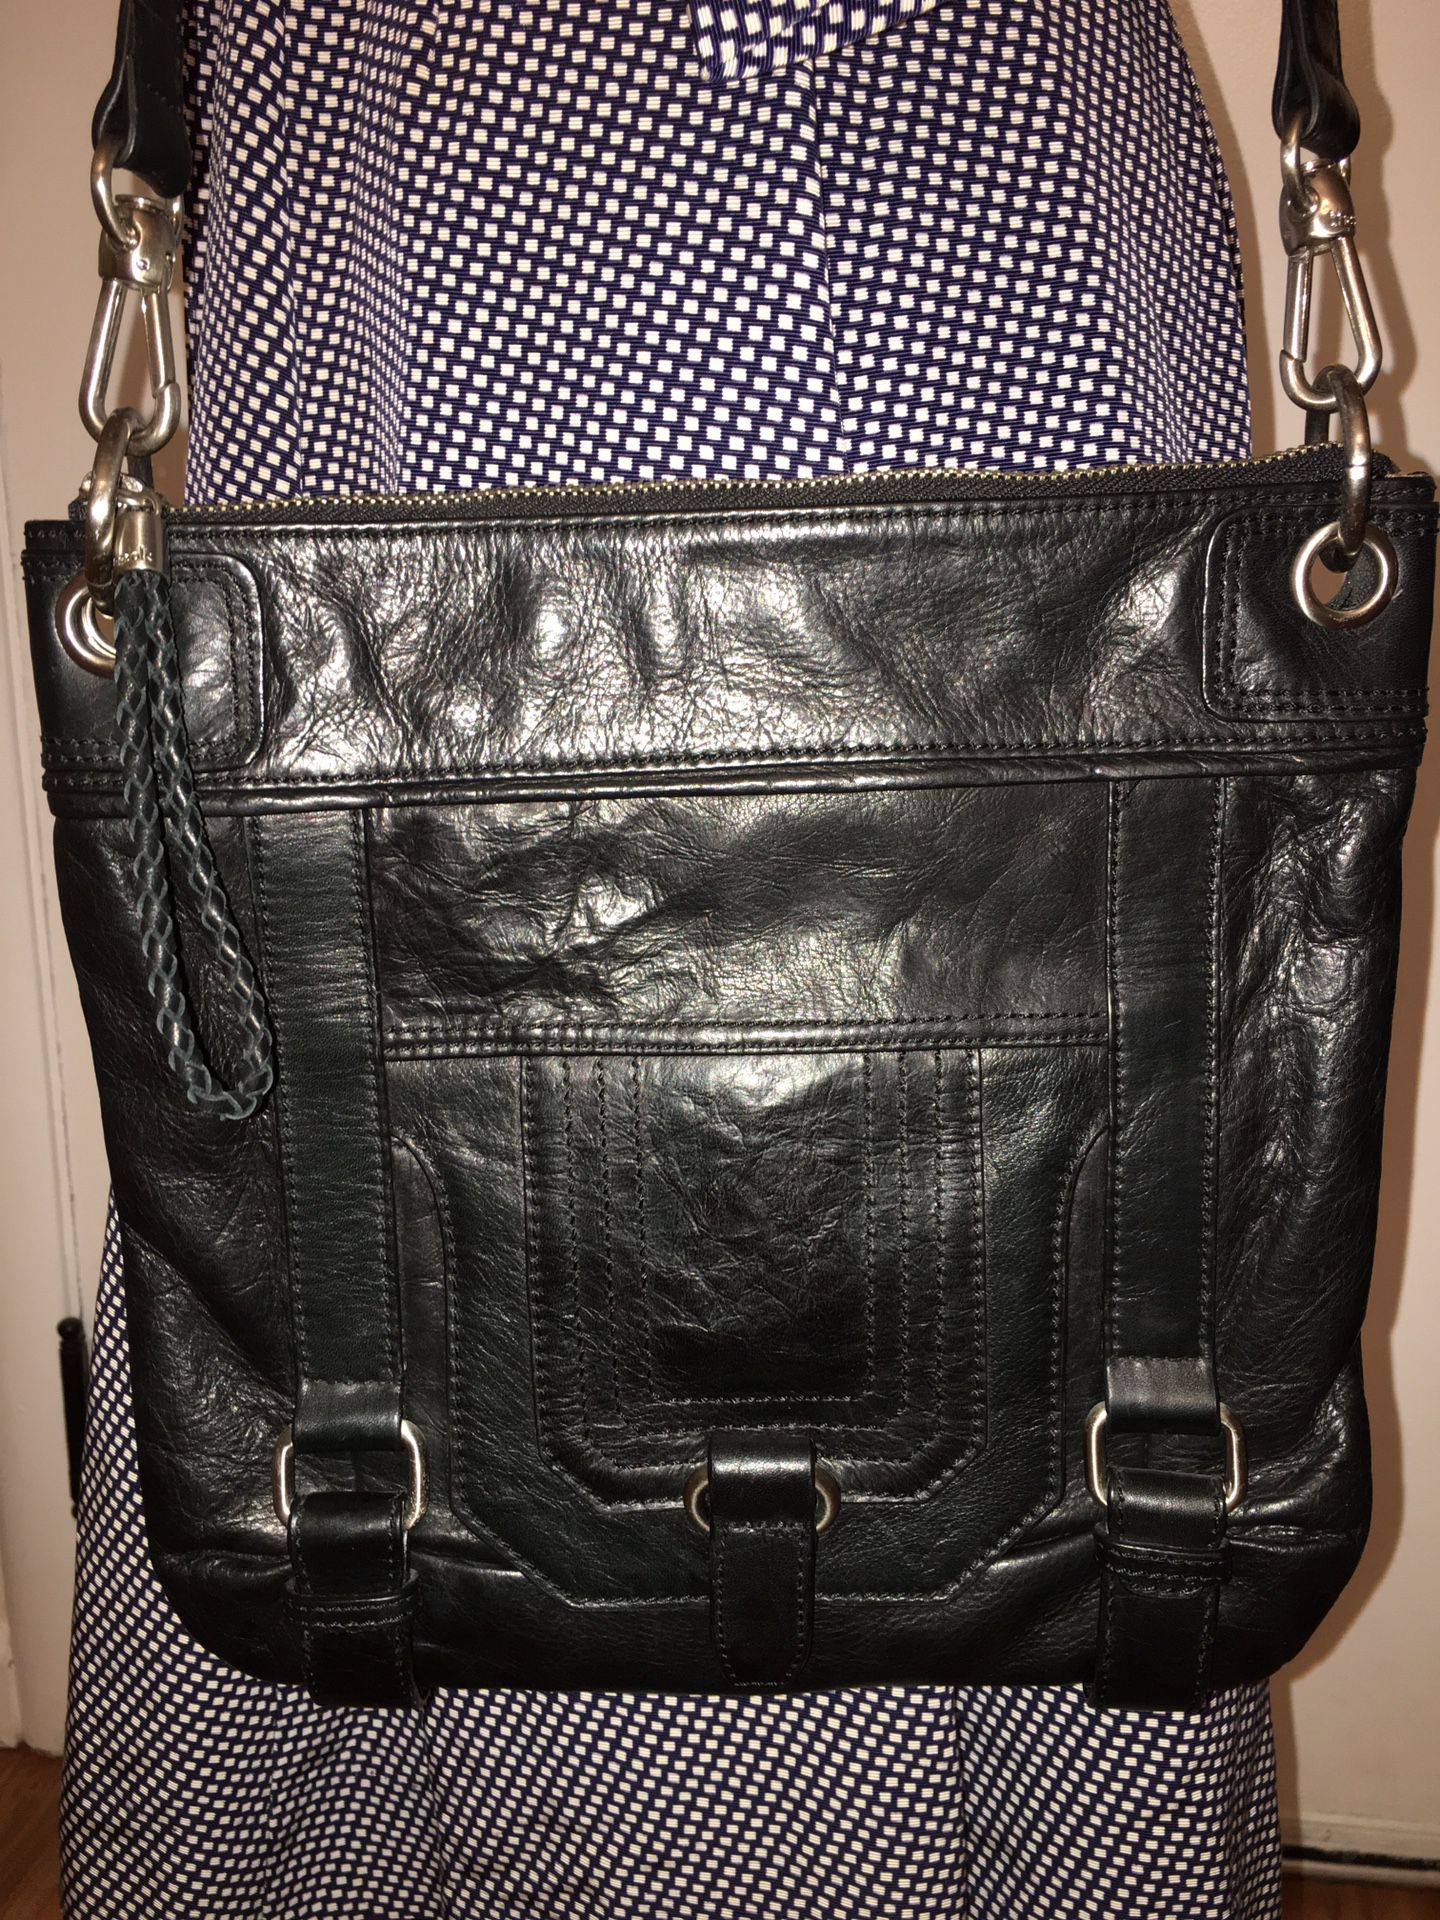 Black leather crossbody bag by The Sak